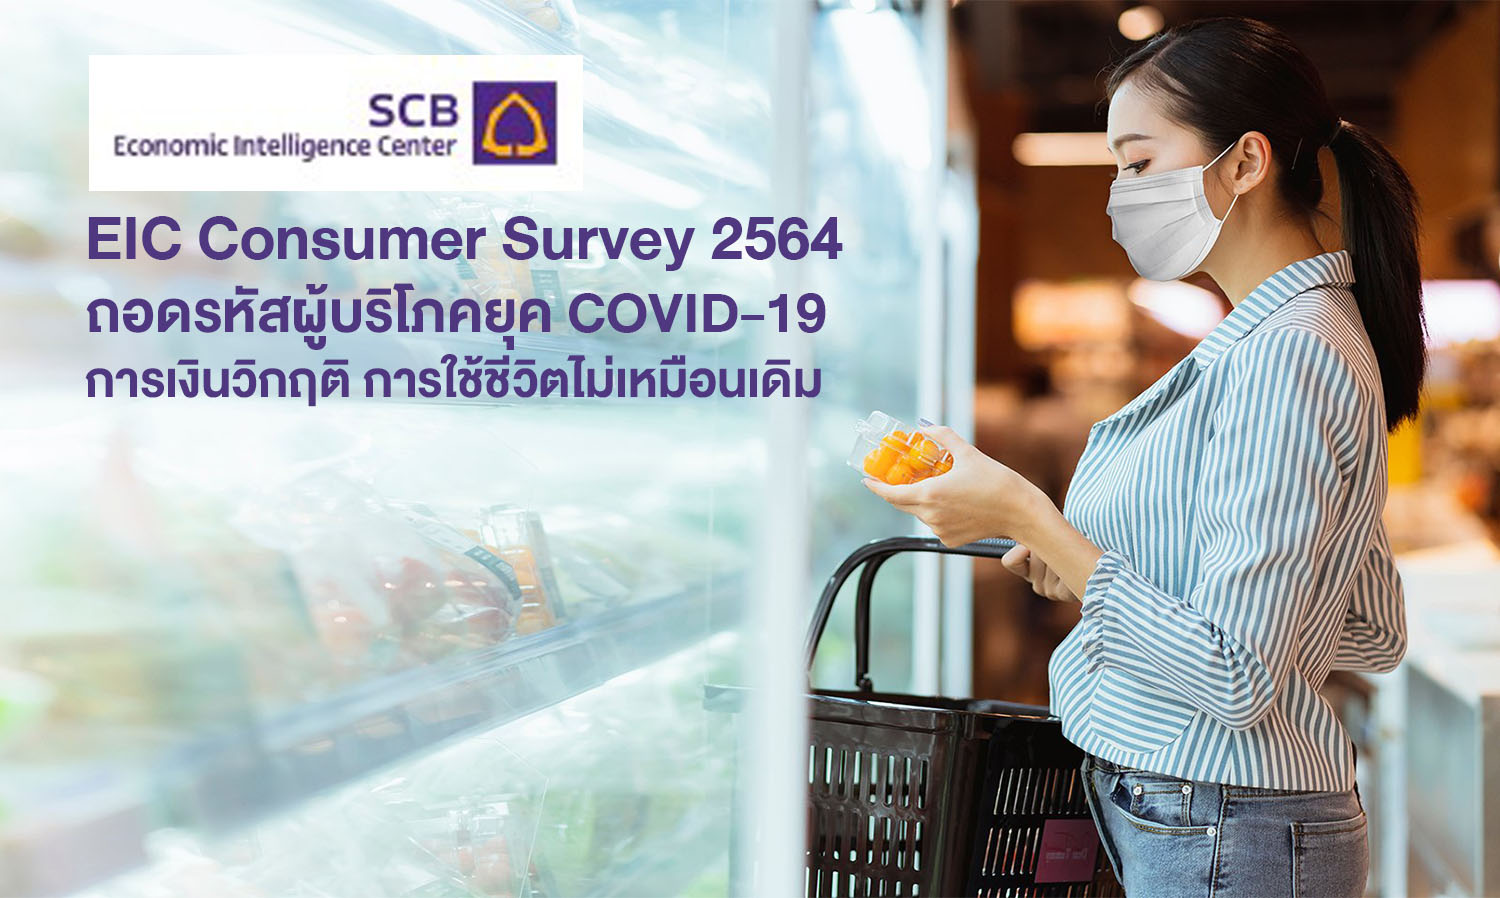 EIC Consumer Survey 2564 : ถอดรหัสผู้บริโภคยุค COVID-19 การเงินวิกฤติ การใช้ชีวิตไม่เหมือนเดิม 